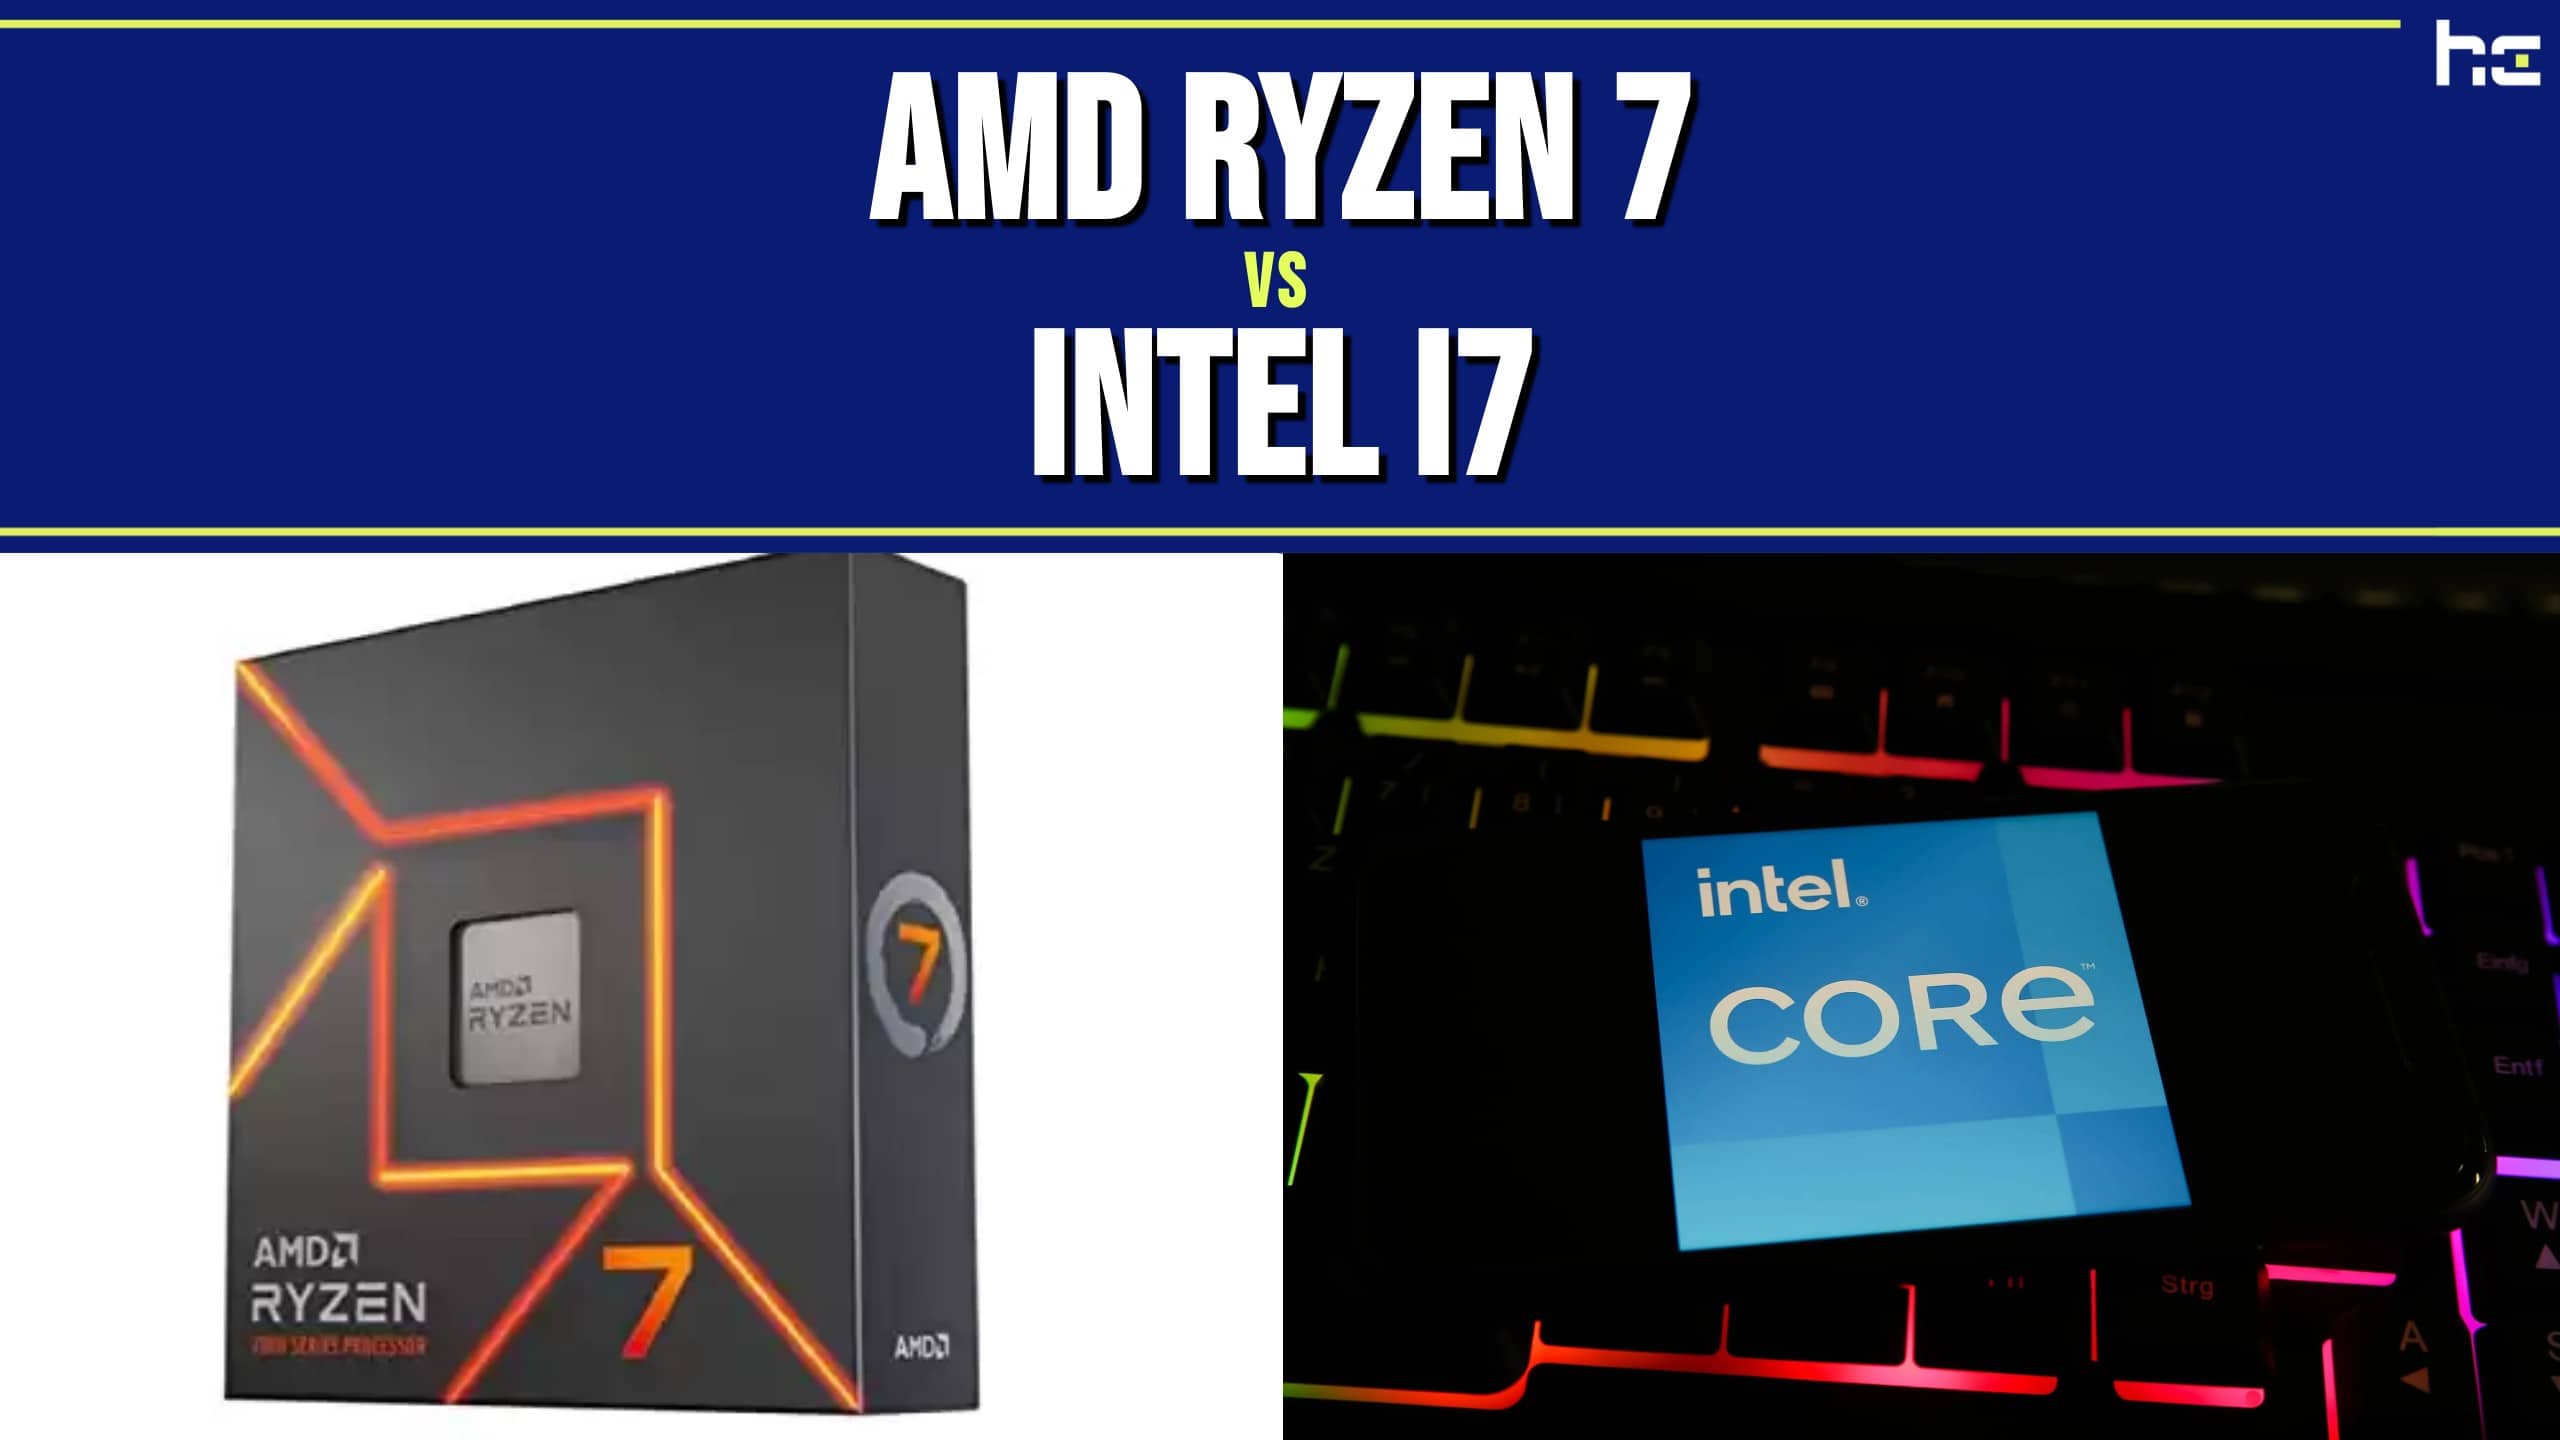 AMD Ryzen 7 vs Intel i7 featured image